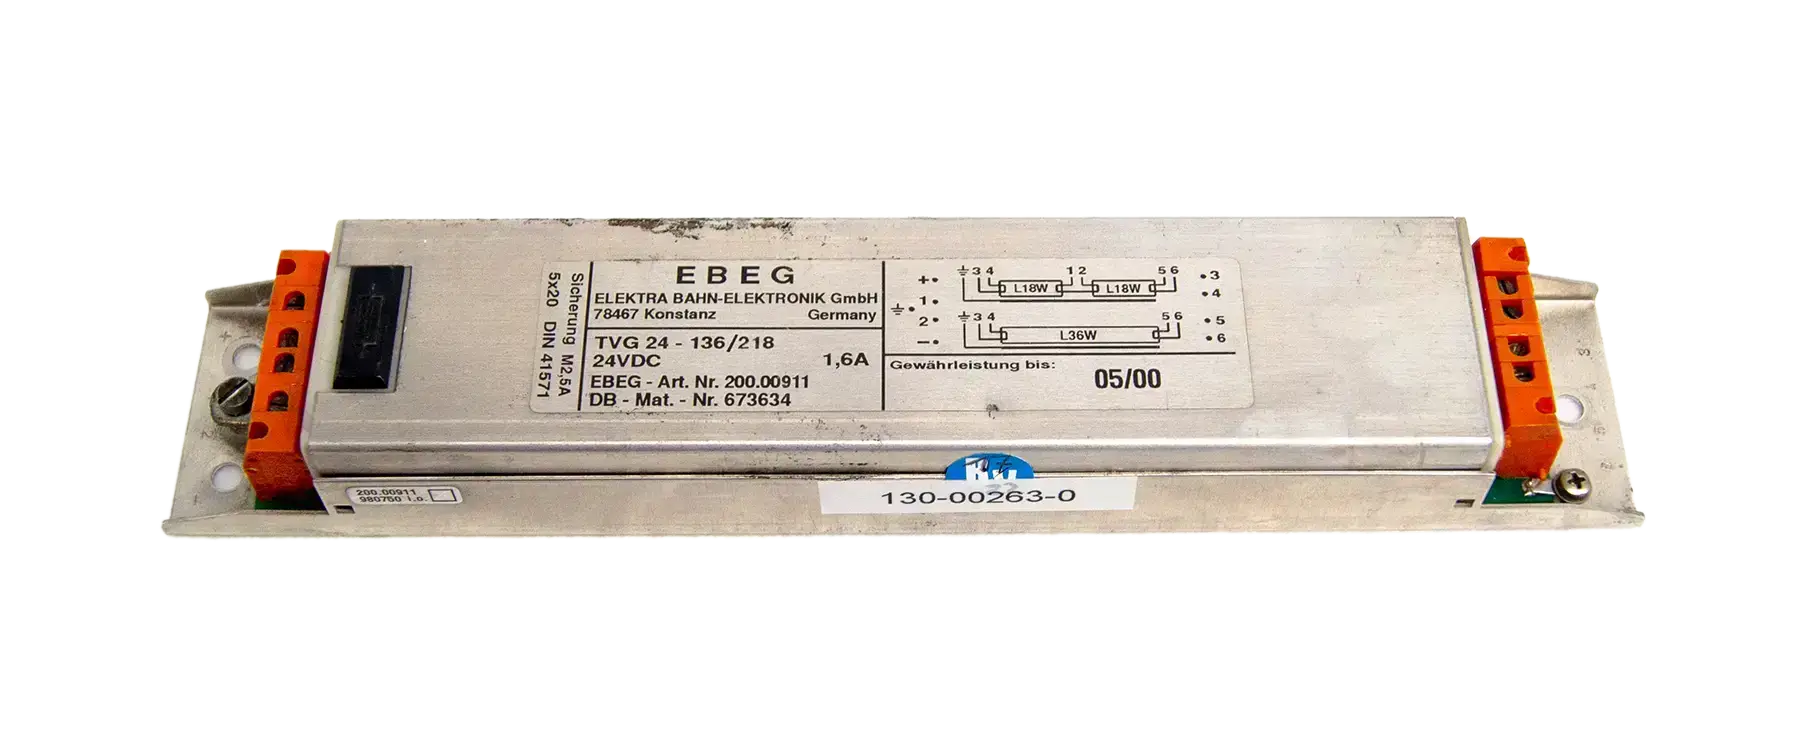 Transistorvorschaltgerät EBEG 24-136/218 24V Rep. Vergleichsnummer 